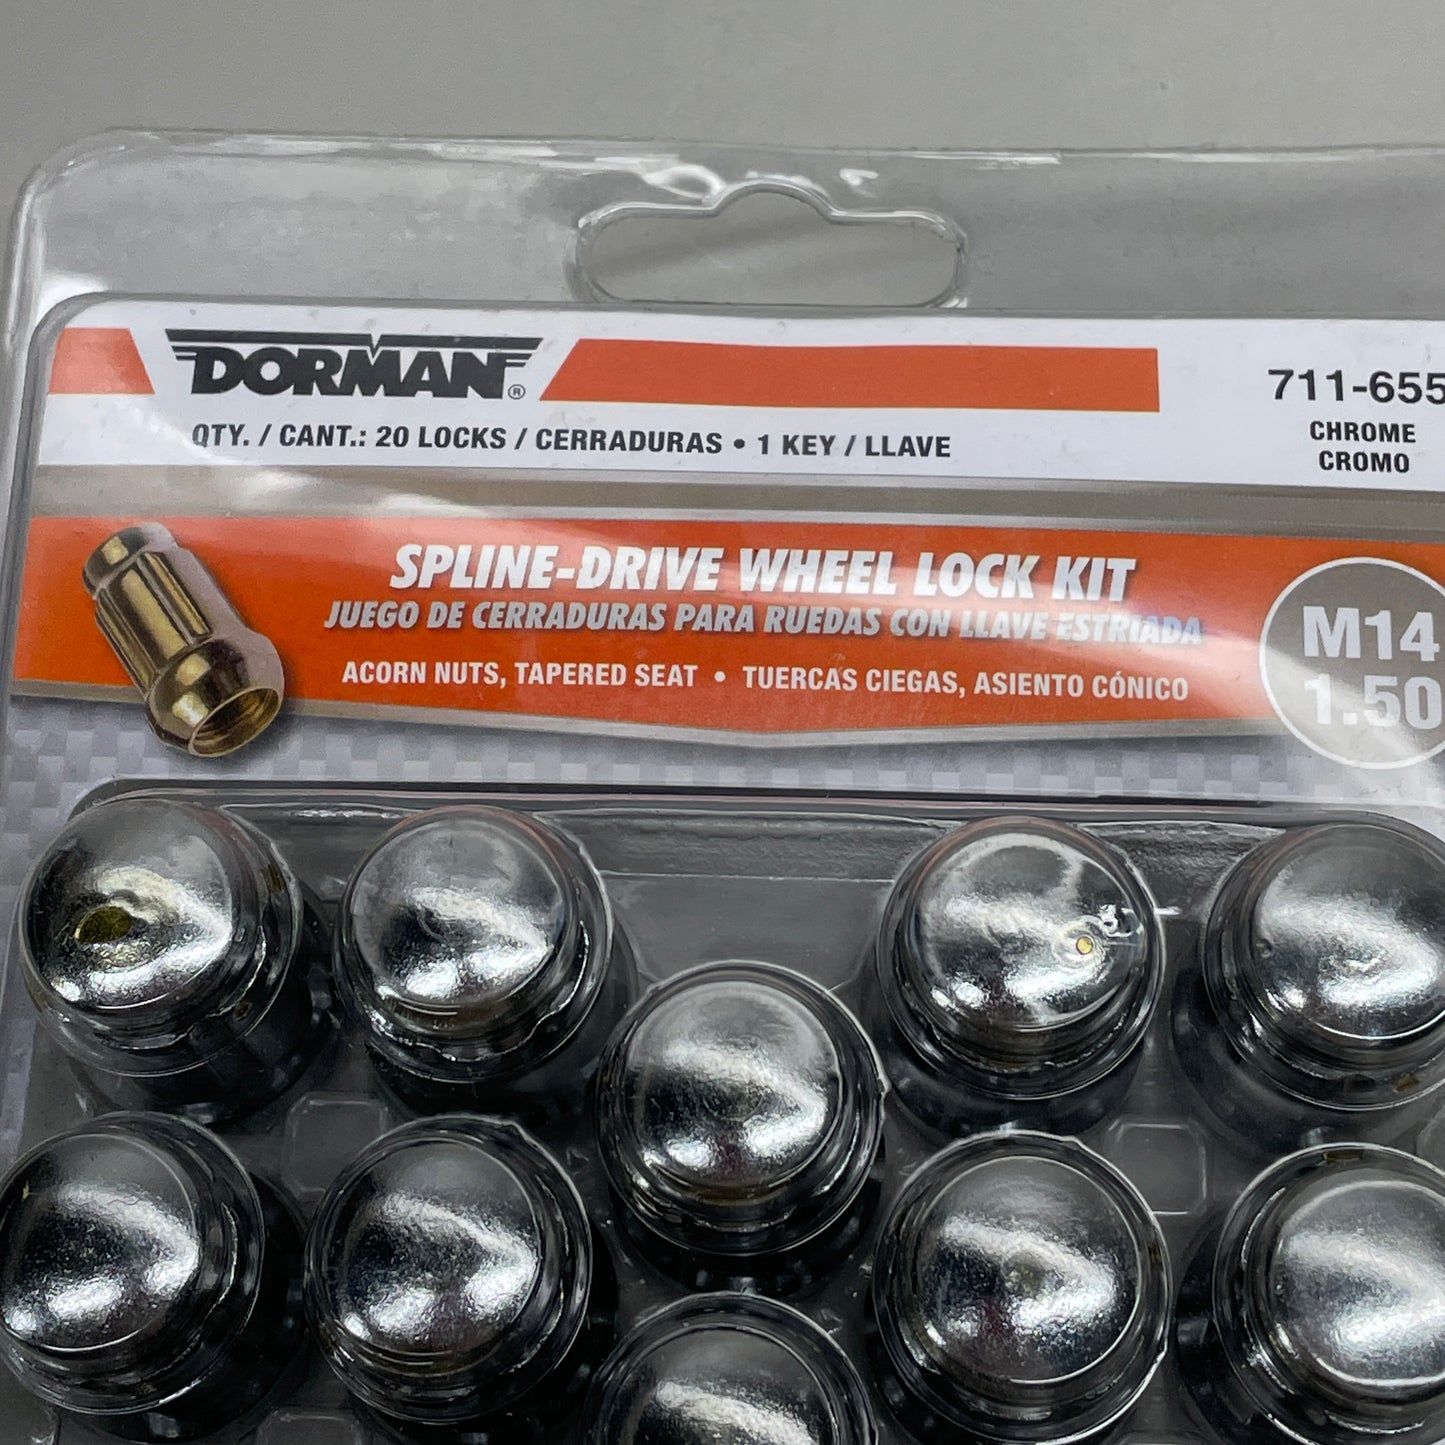 DORMAN Chrome Spline-Drive Wheel Lock Kit 711-655